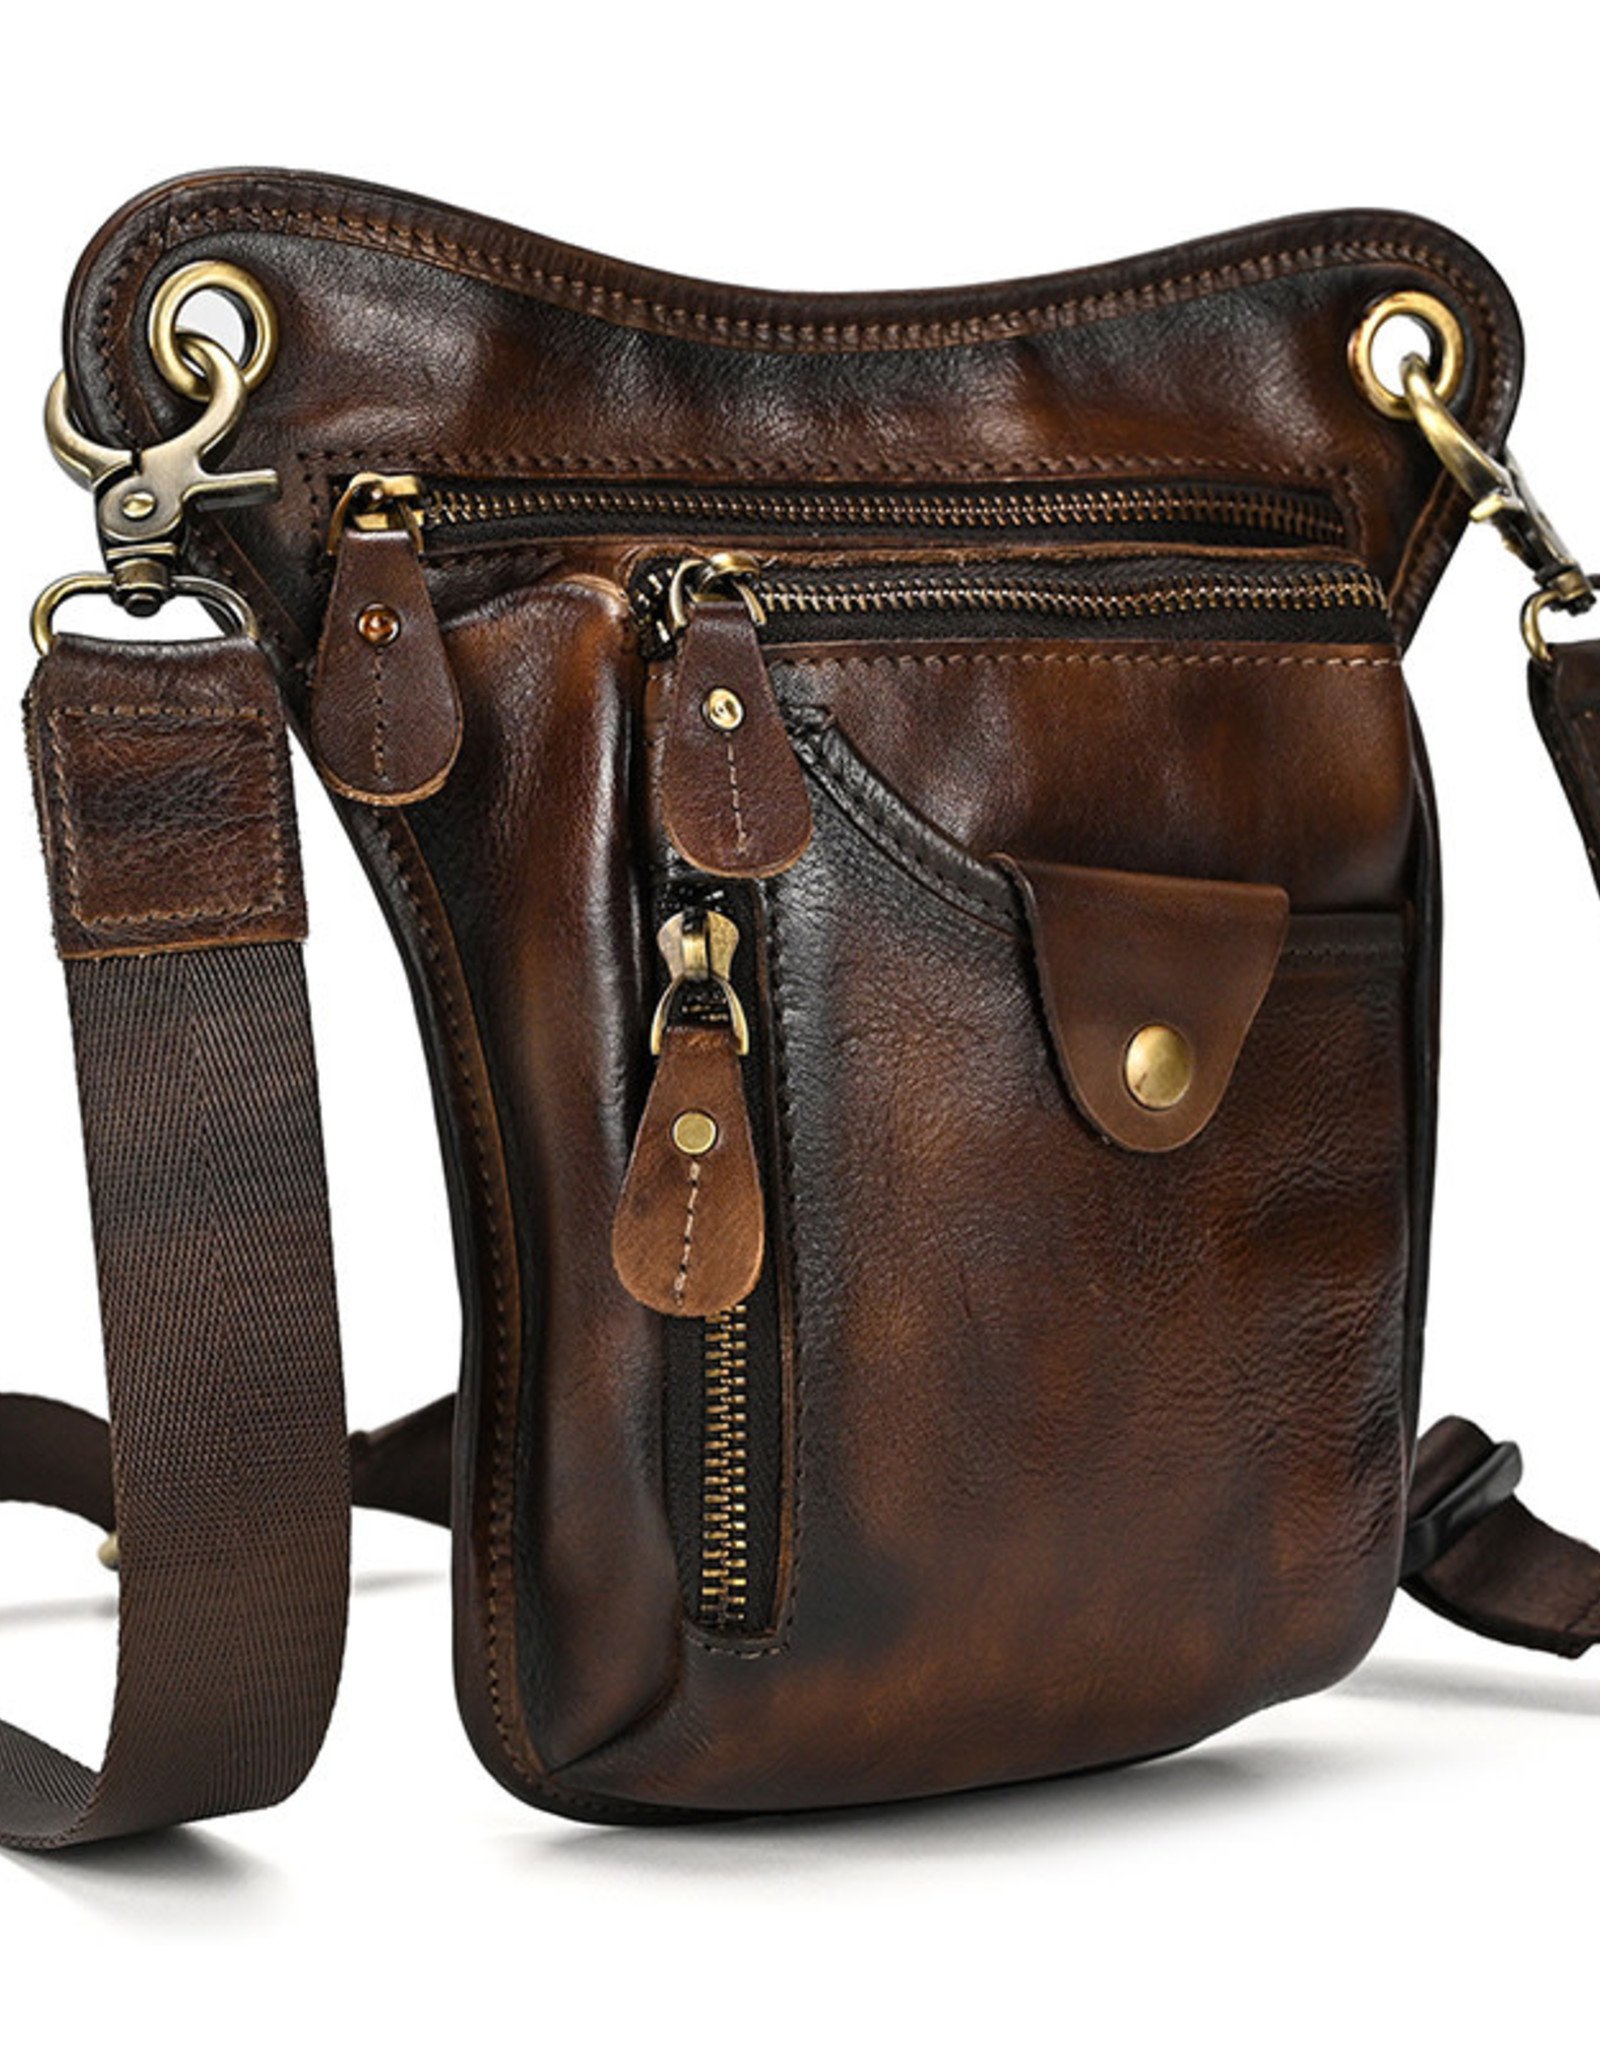  WUTA Luxury Brand Genuine Leather Bag Strap